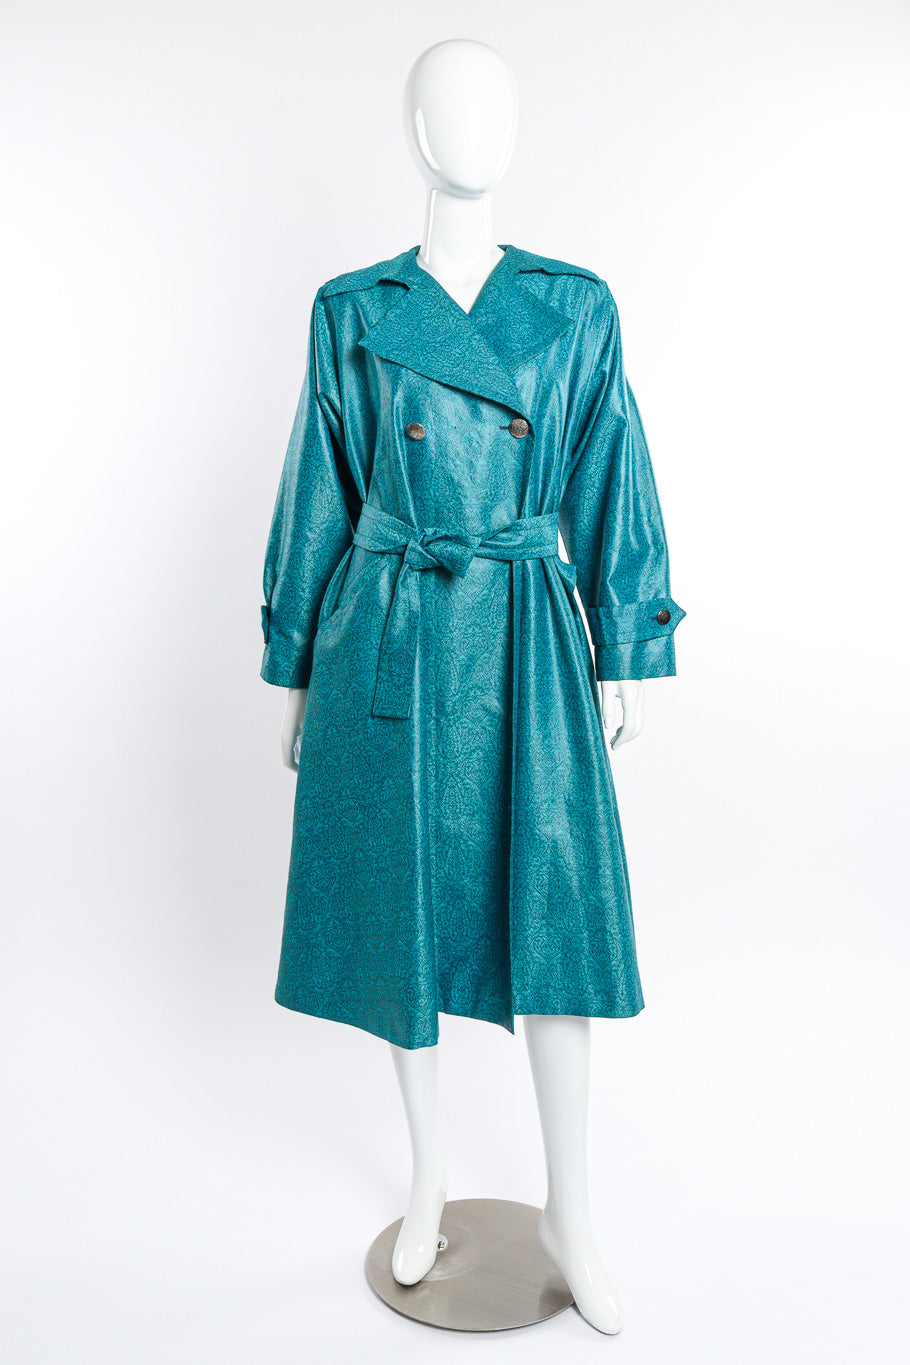 Vintage Yves Saint Laurent Damask Trench Coat front on mannequin @recessla